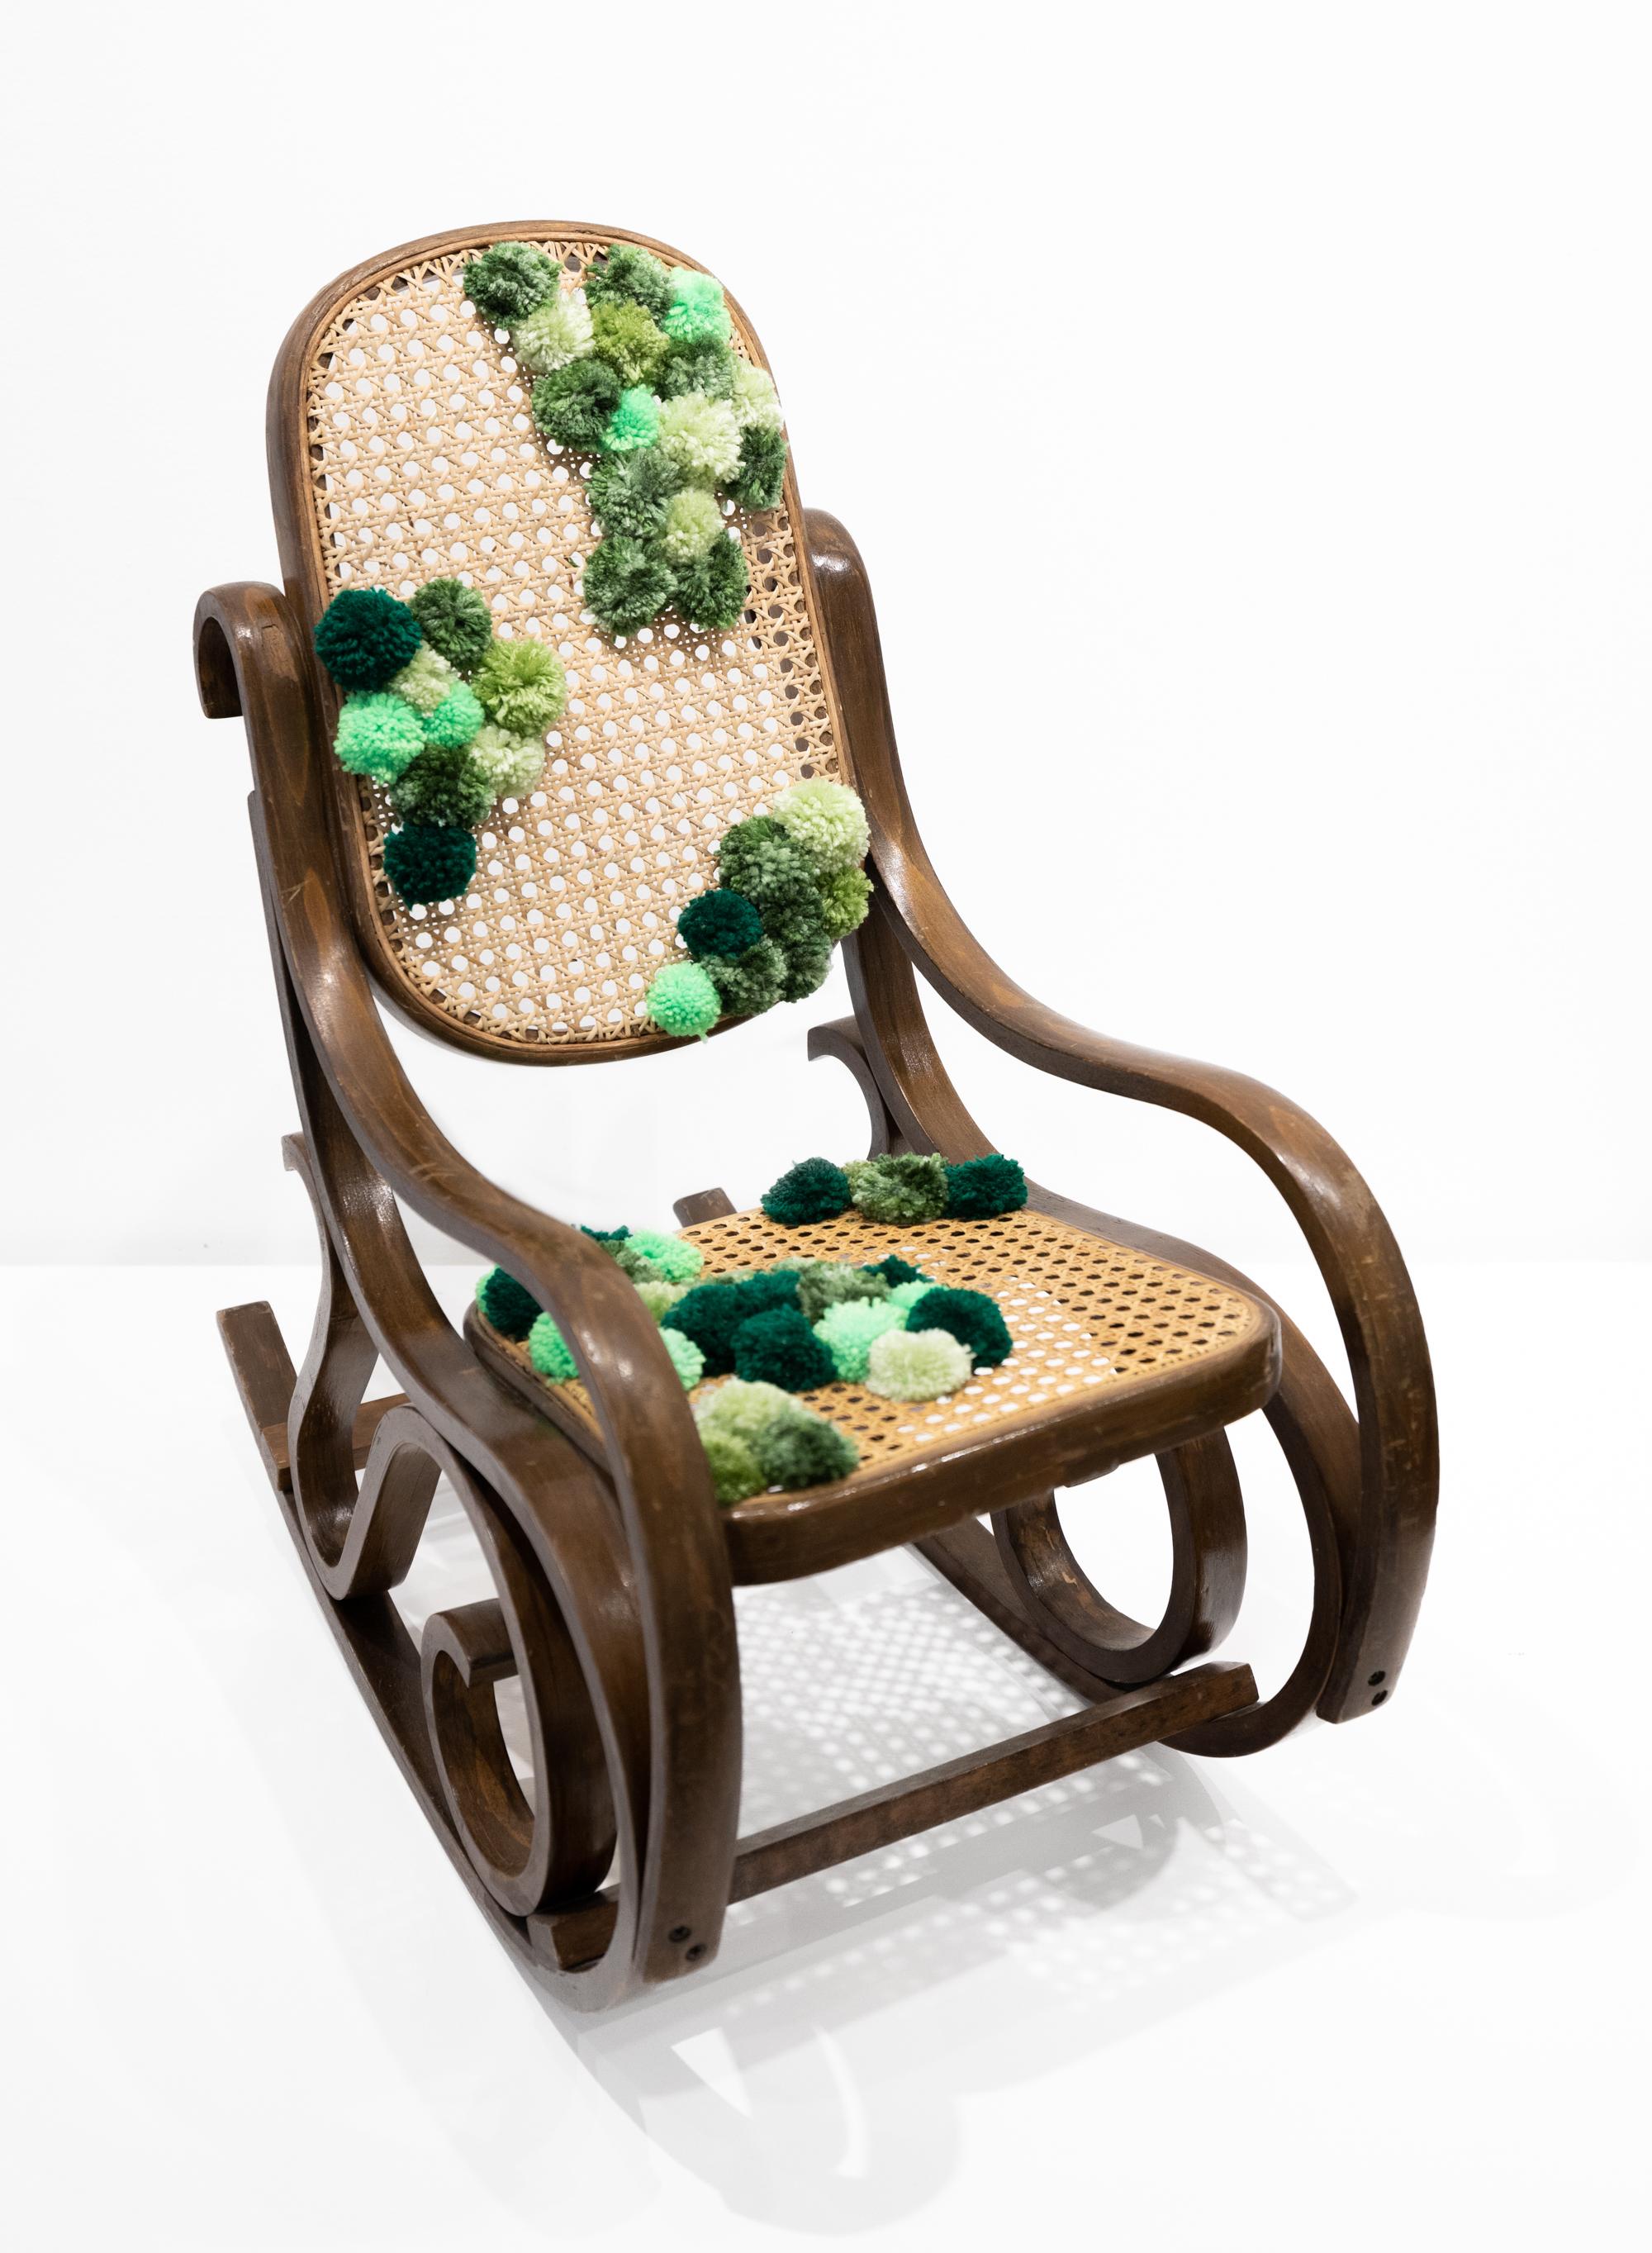 "Outgrown" Vintage found object, woven yarn, moss motif, chair sculpture - Mixed Media Art by Sarah Detweiler